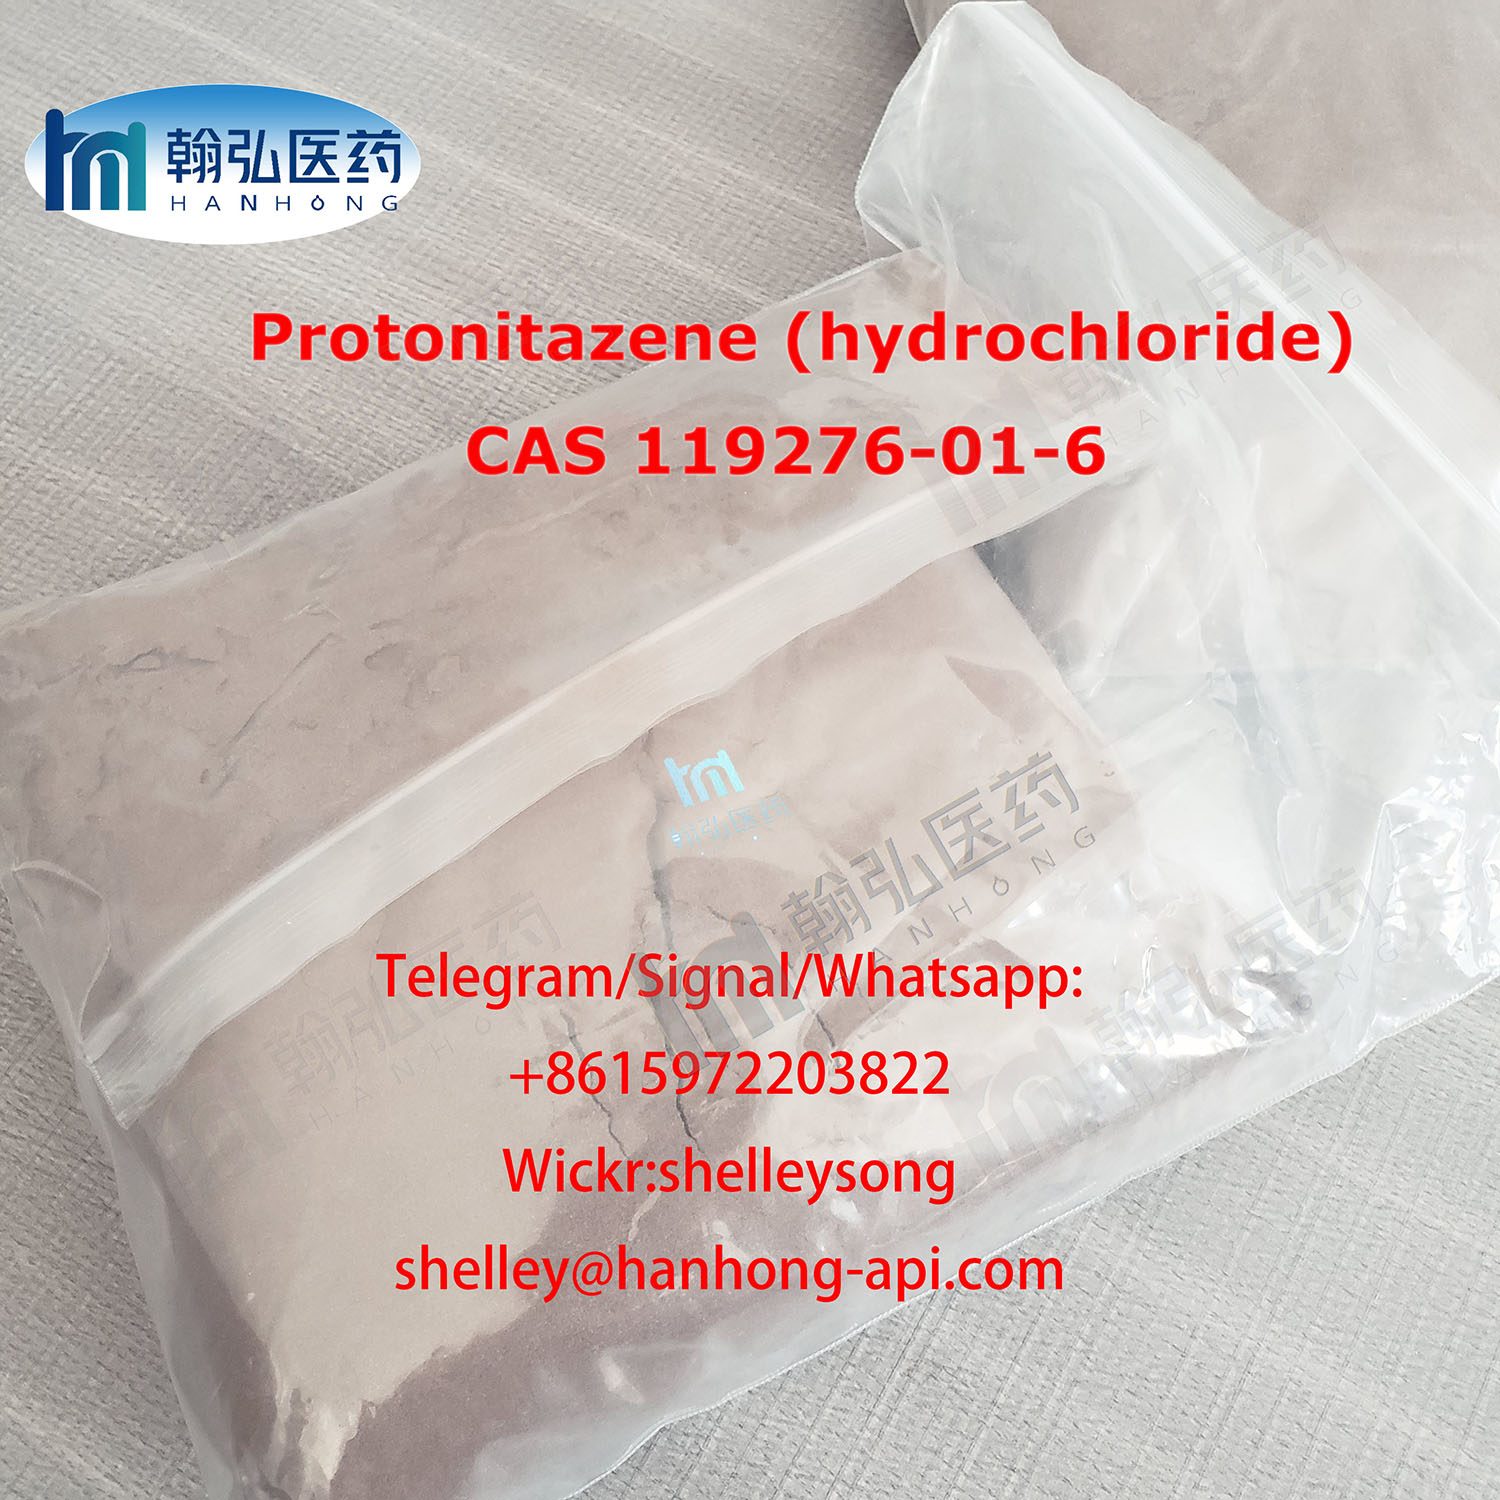 CAS 119276-01-6 Protonitazene Hydrochloride WhatsAPP/Signal/Telegram: +8615972203822 